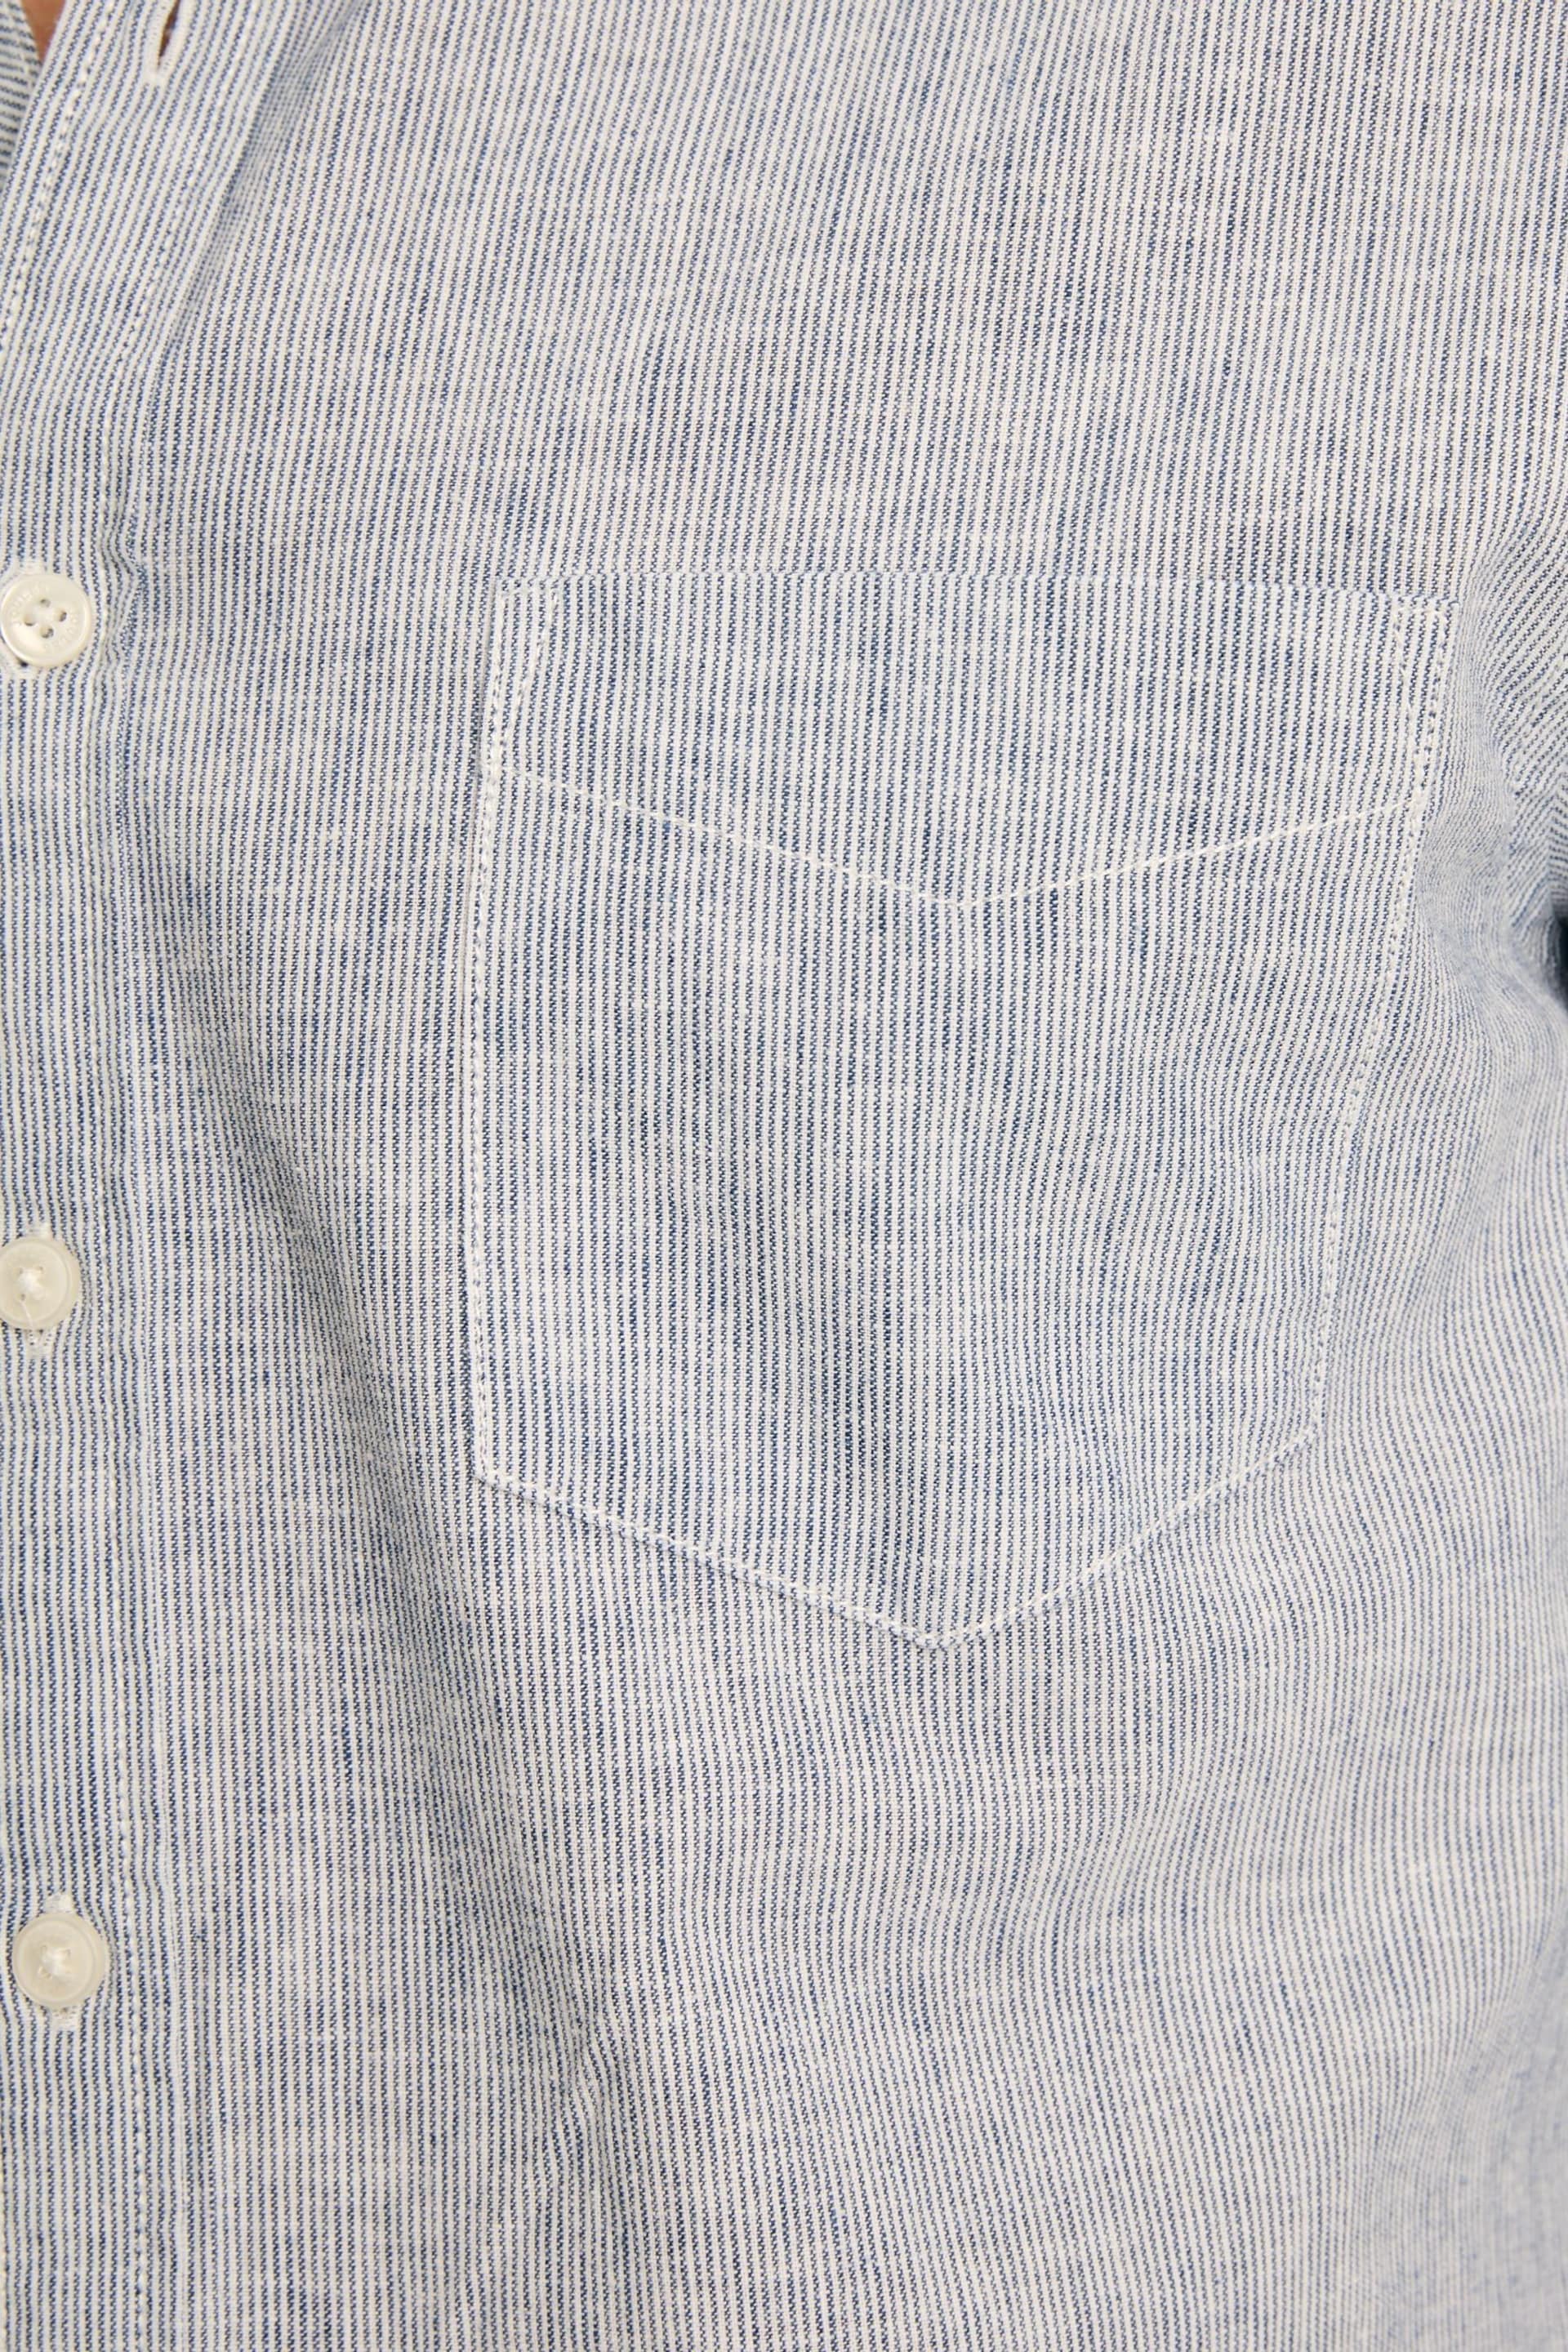 Joules Linen Blend Blue Stripe Plain Long Sleeve Shirt - Image 7 of 7